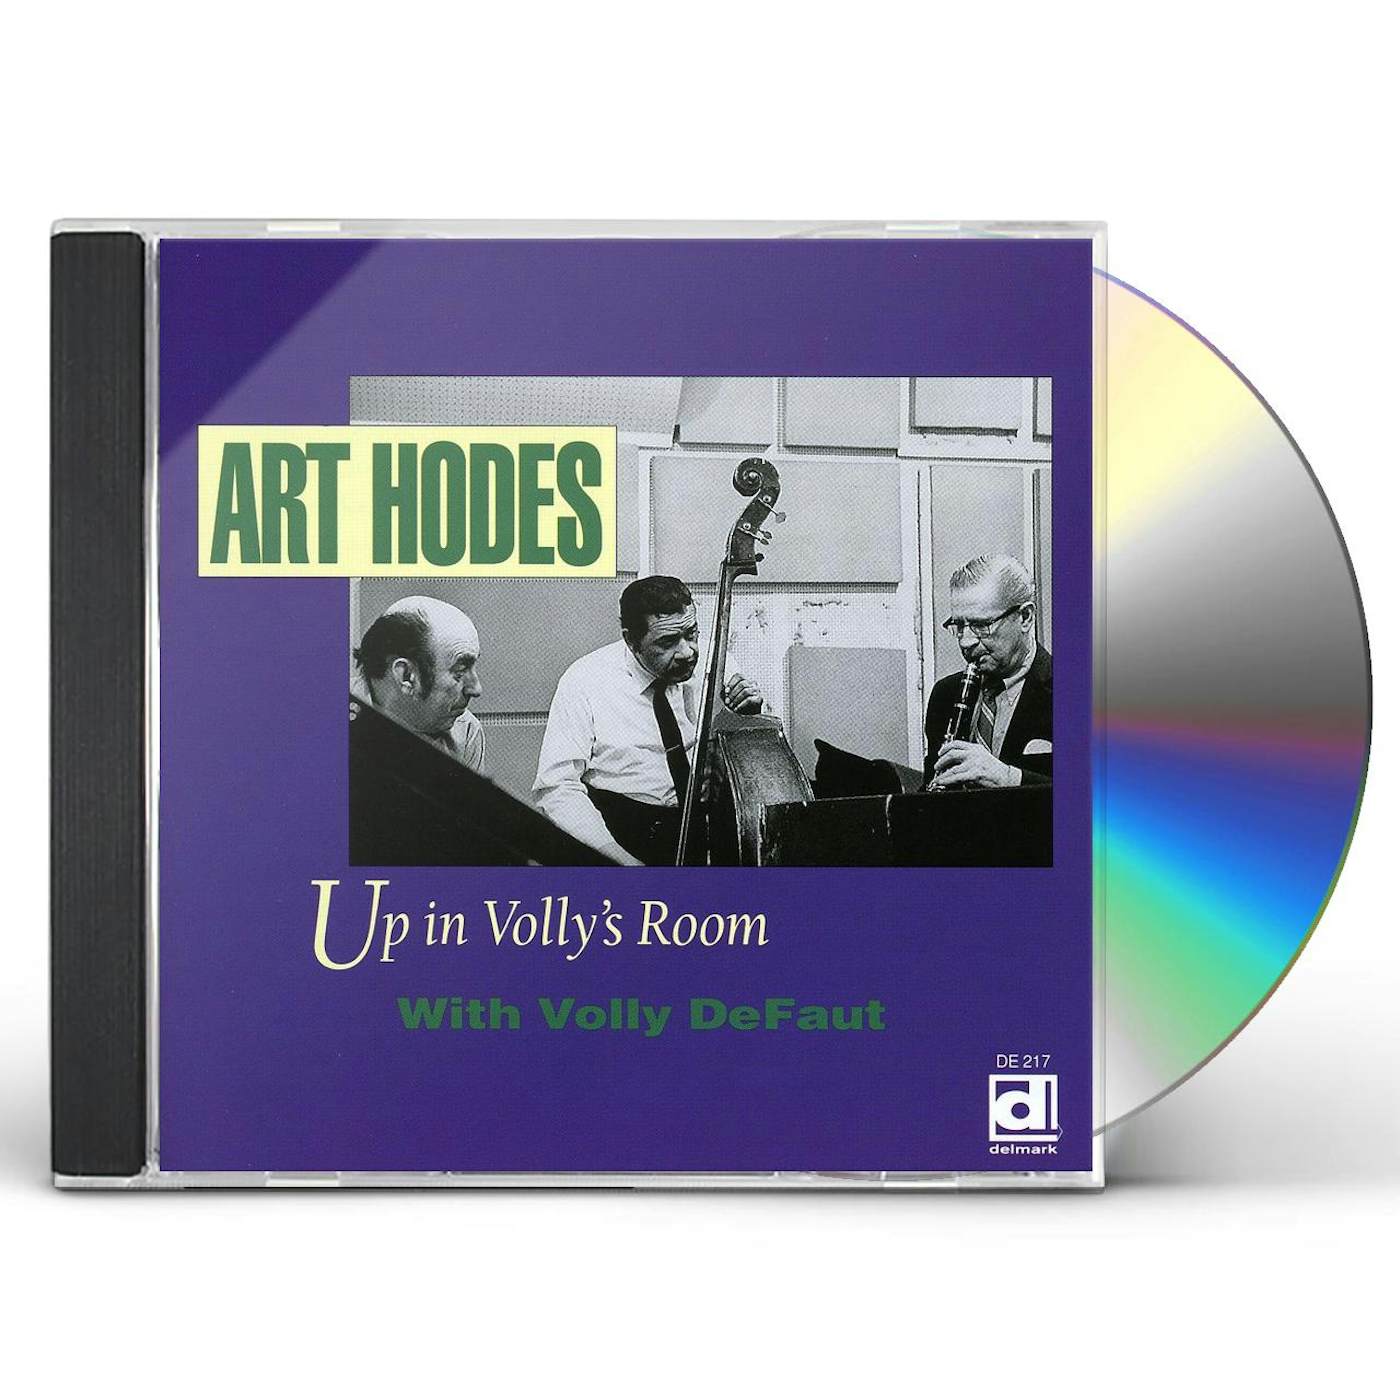 Art Hodes UP IN VOLLEY'S ROOM CD